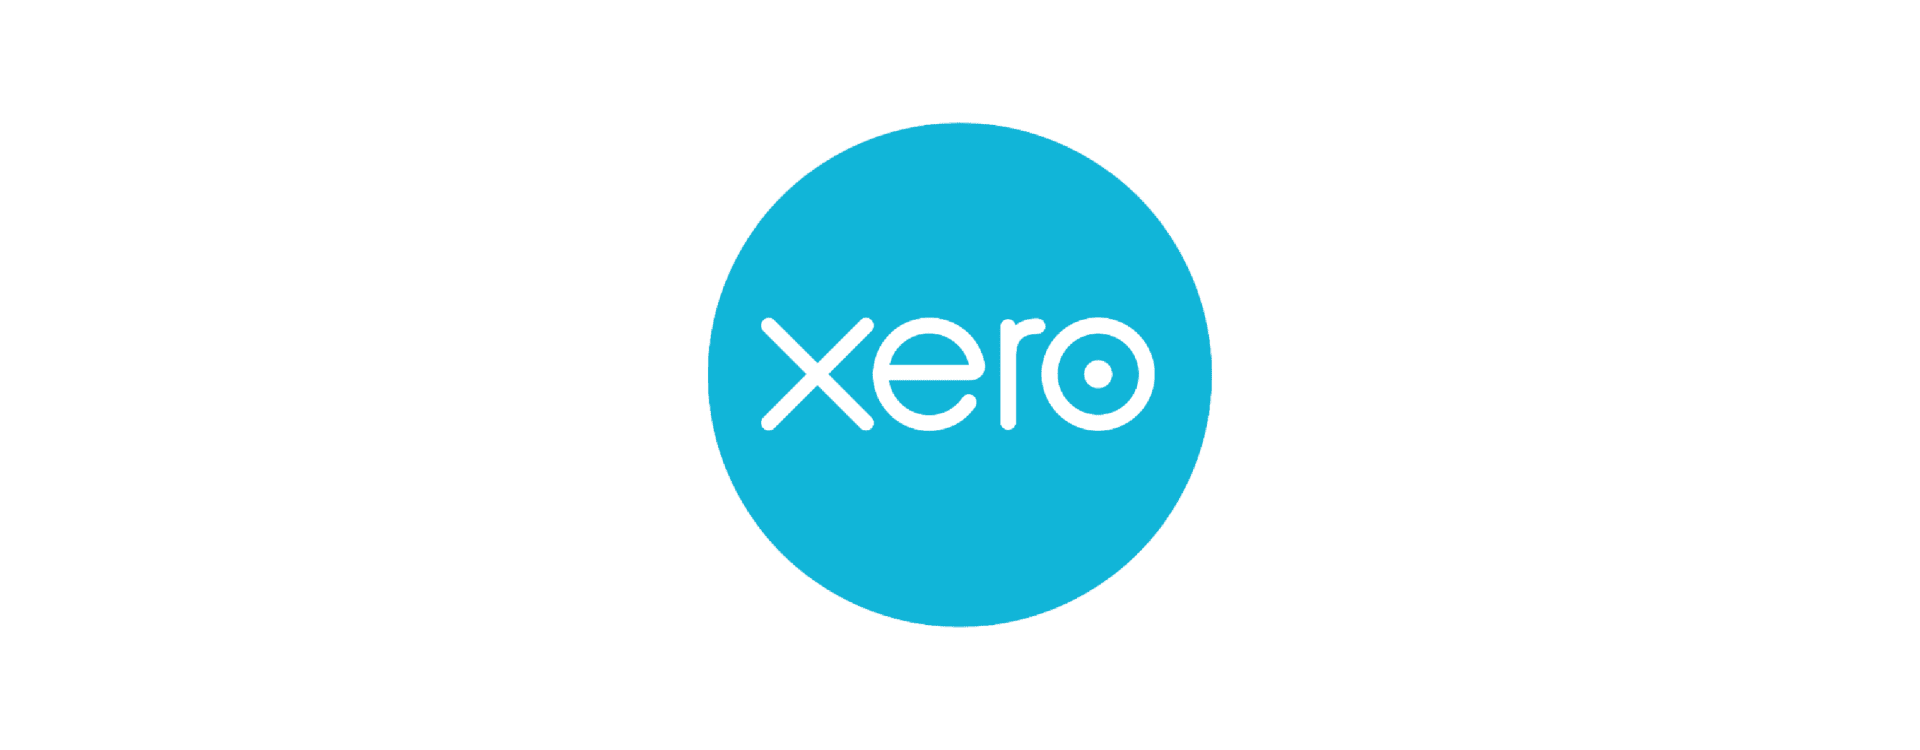 Xero Partnership with Texada